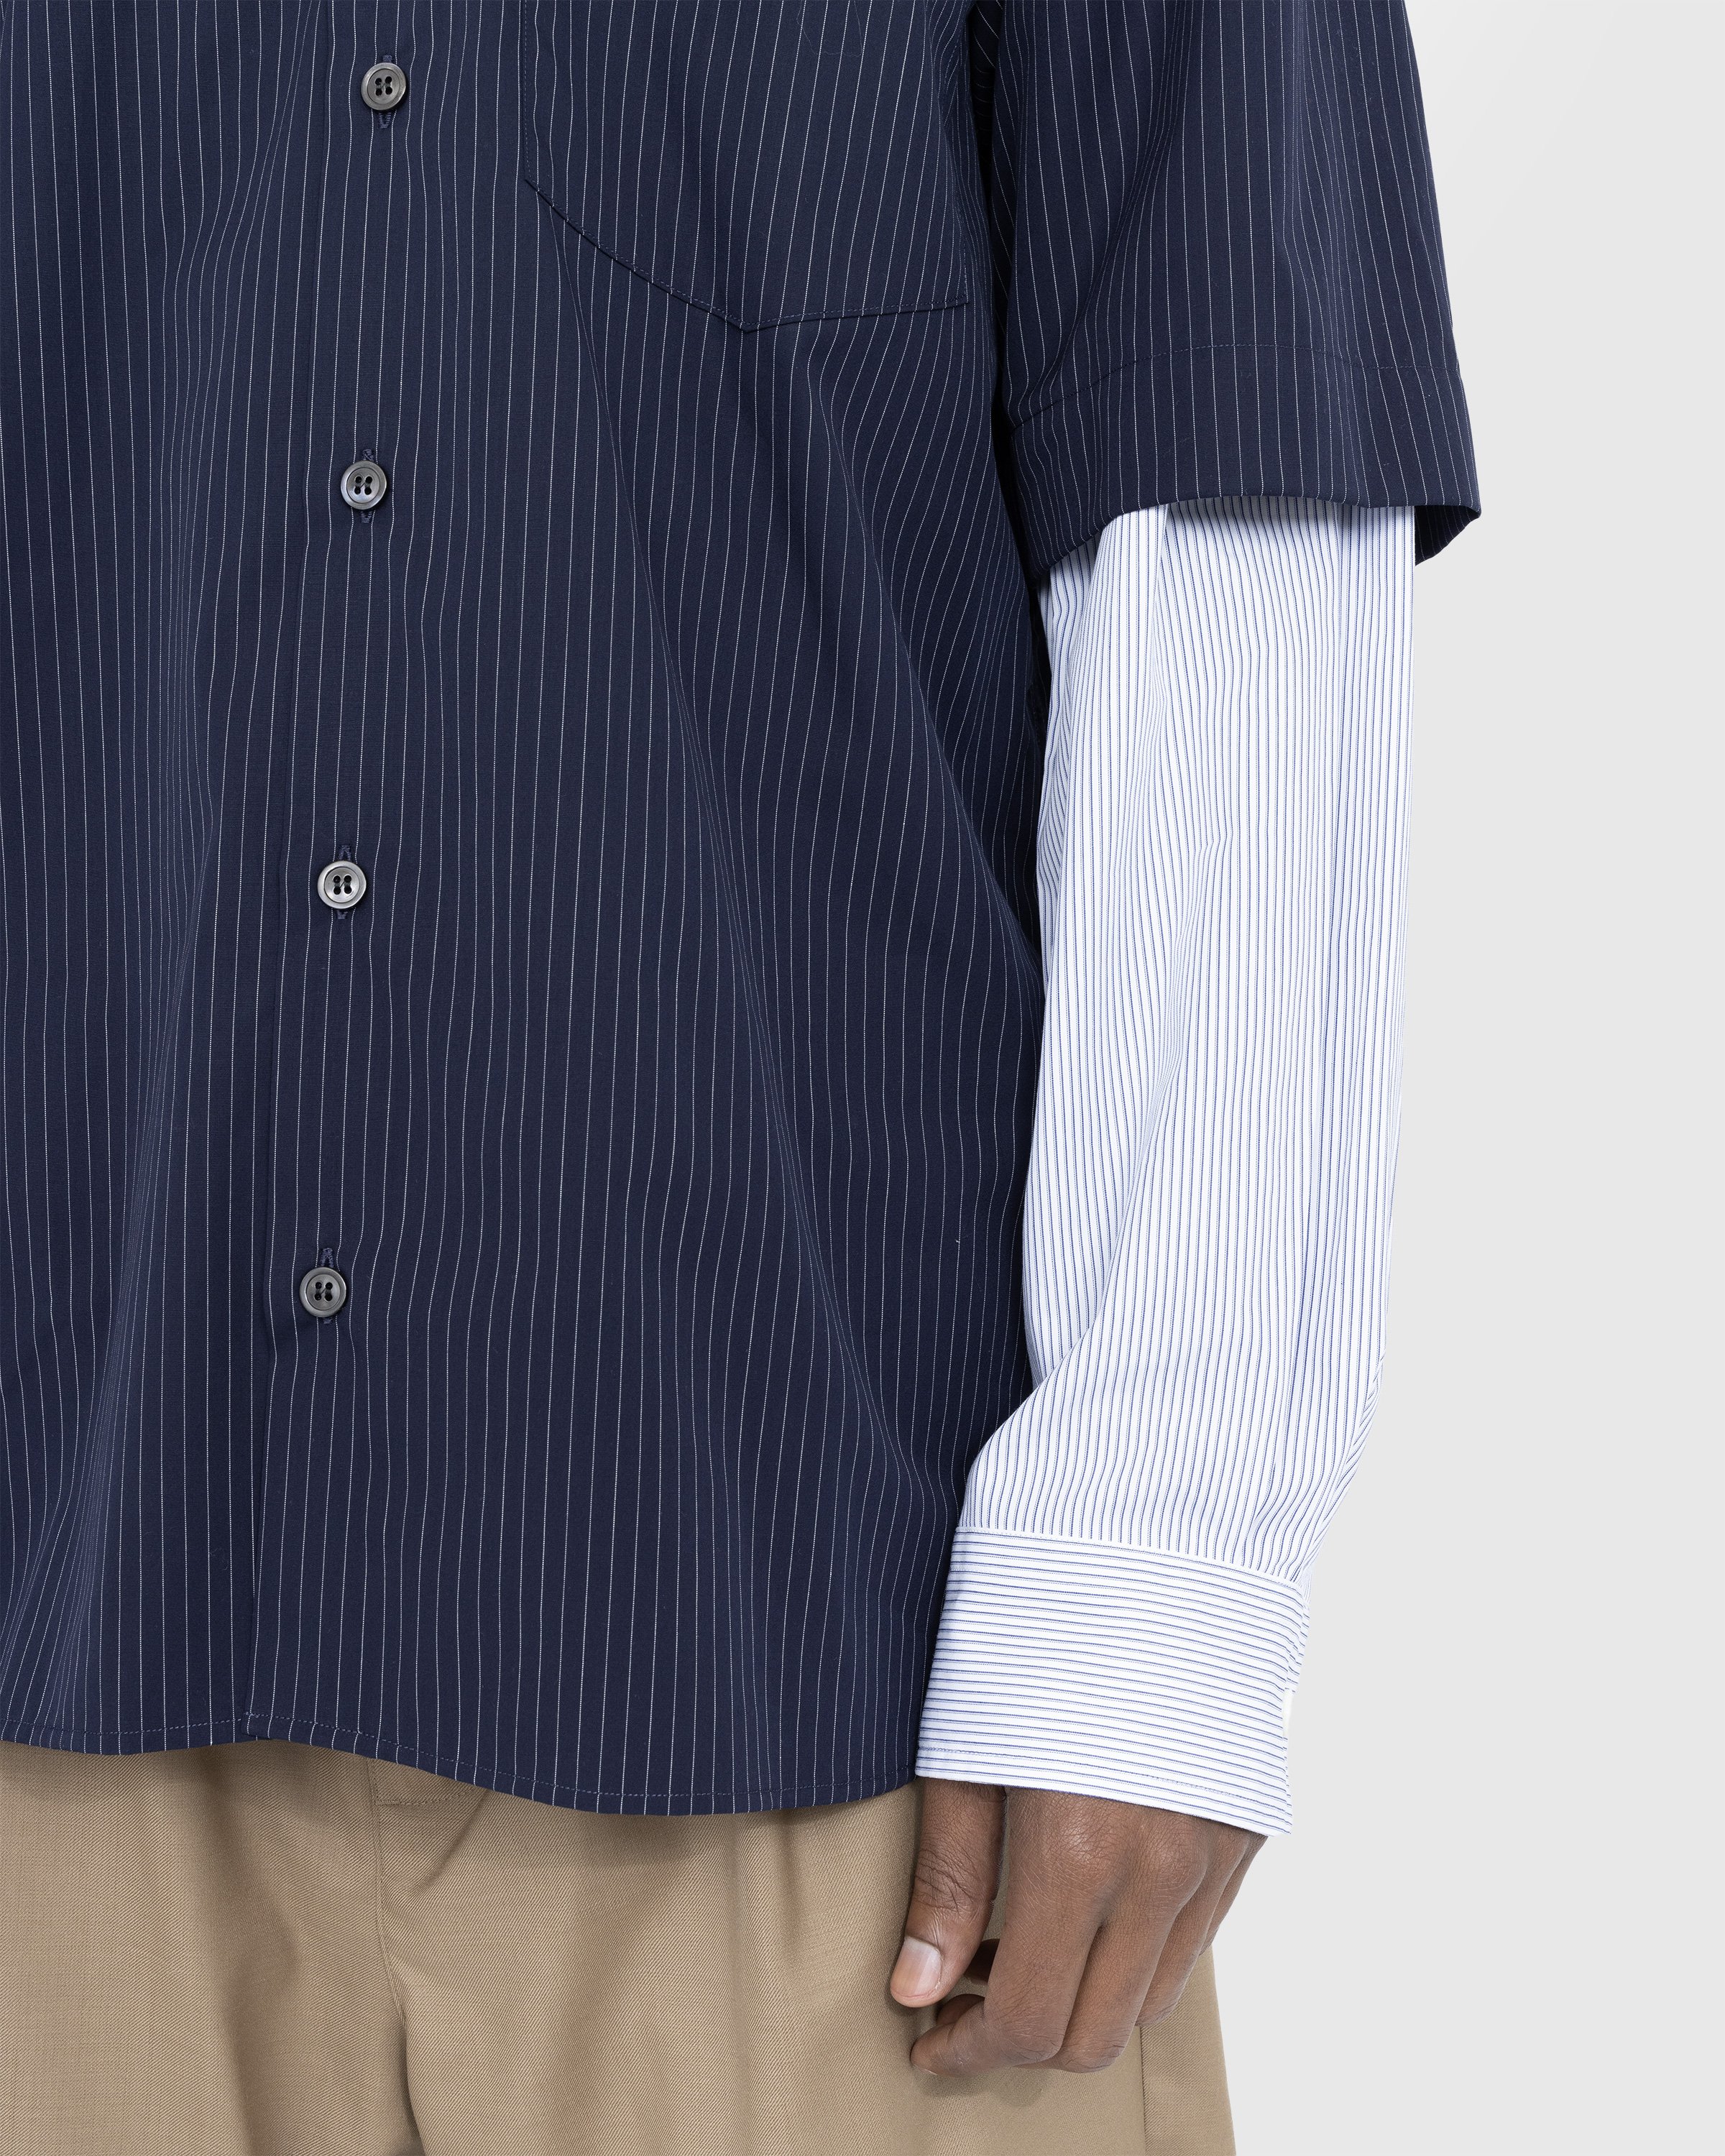 Dries van Noten - Carle Double Sleeve Shirt Navy - Clothing - Blue - Image 4